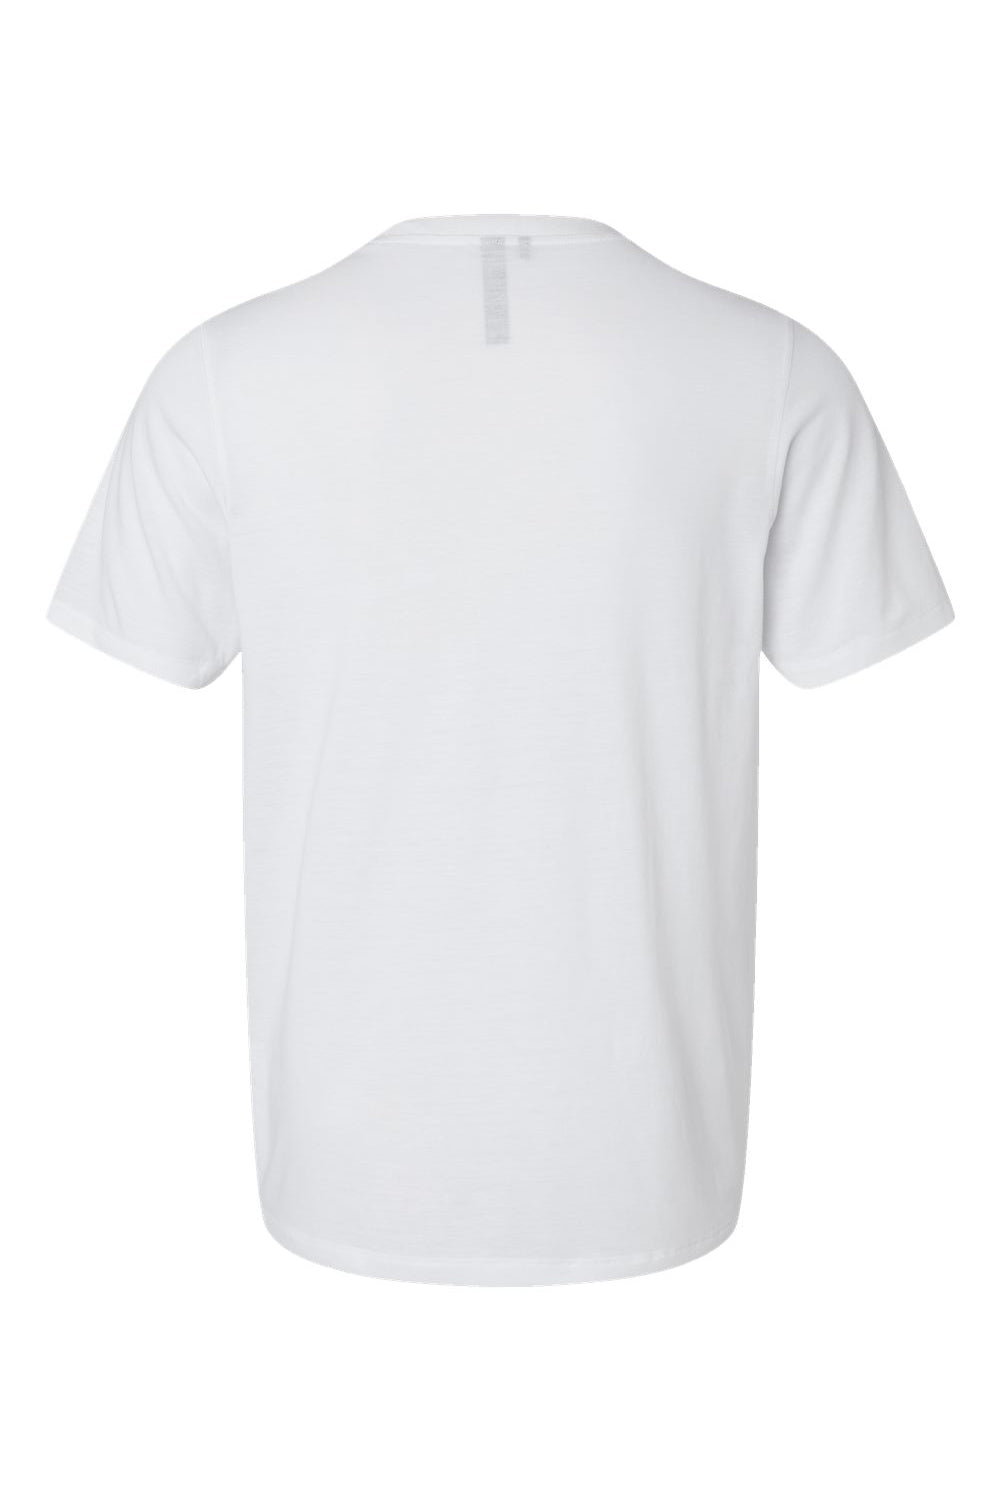 Adidas A556 Mens Short Sleeve Crewneck T-Shirt White Flat Back